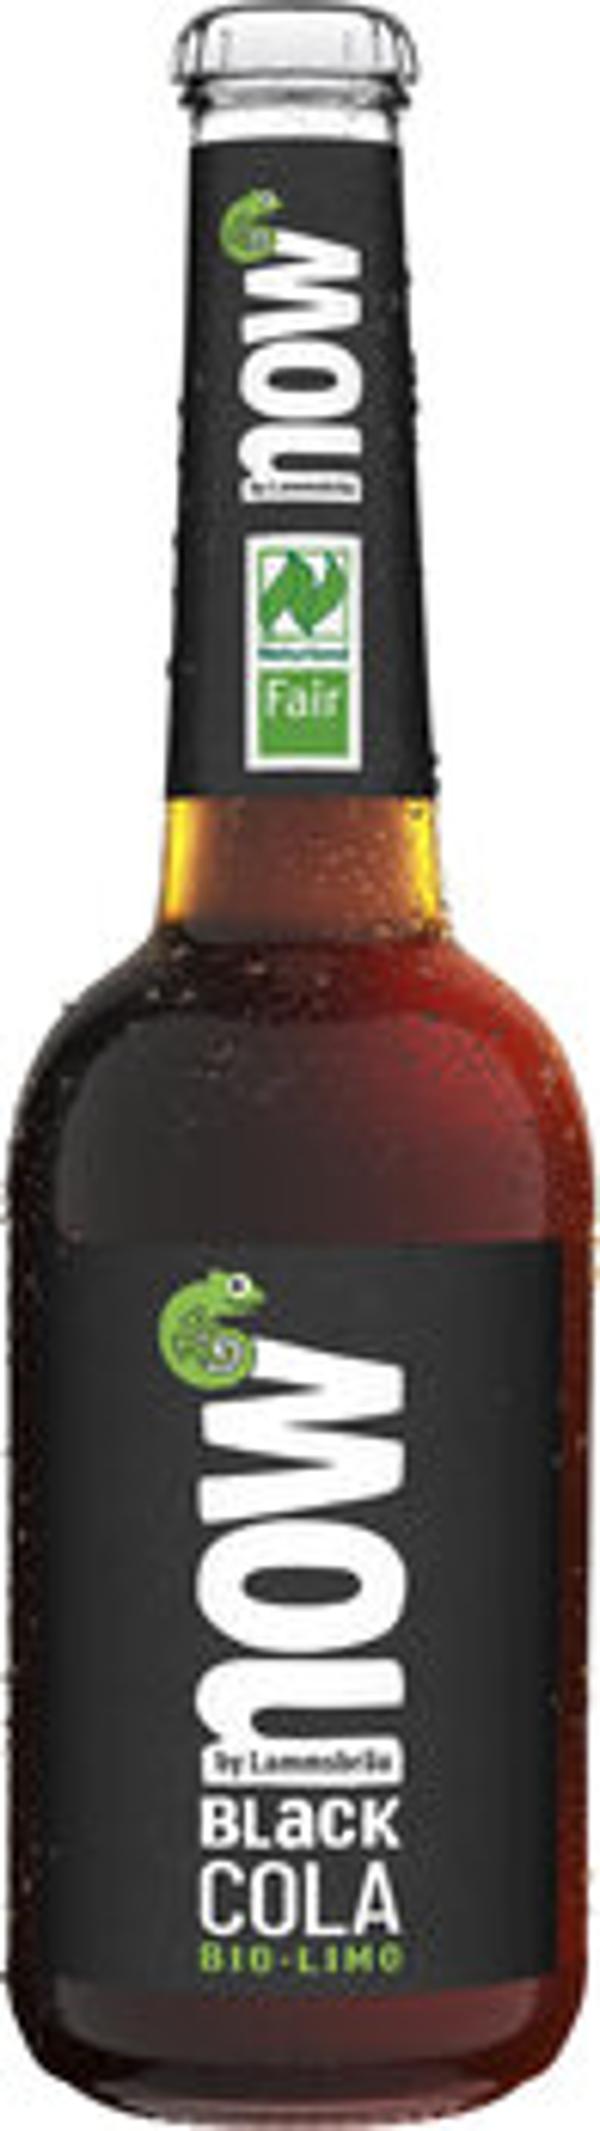 Produktfoto zu NOW Black Cola mit Guarana, 0,33 l